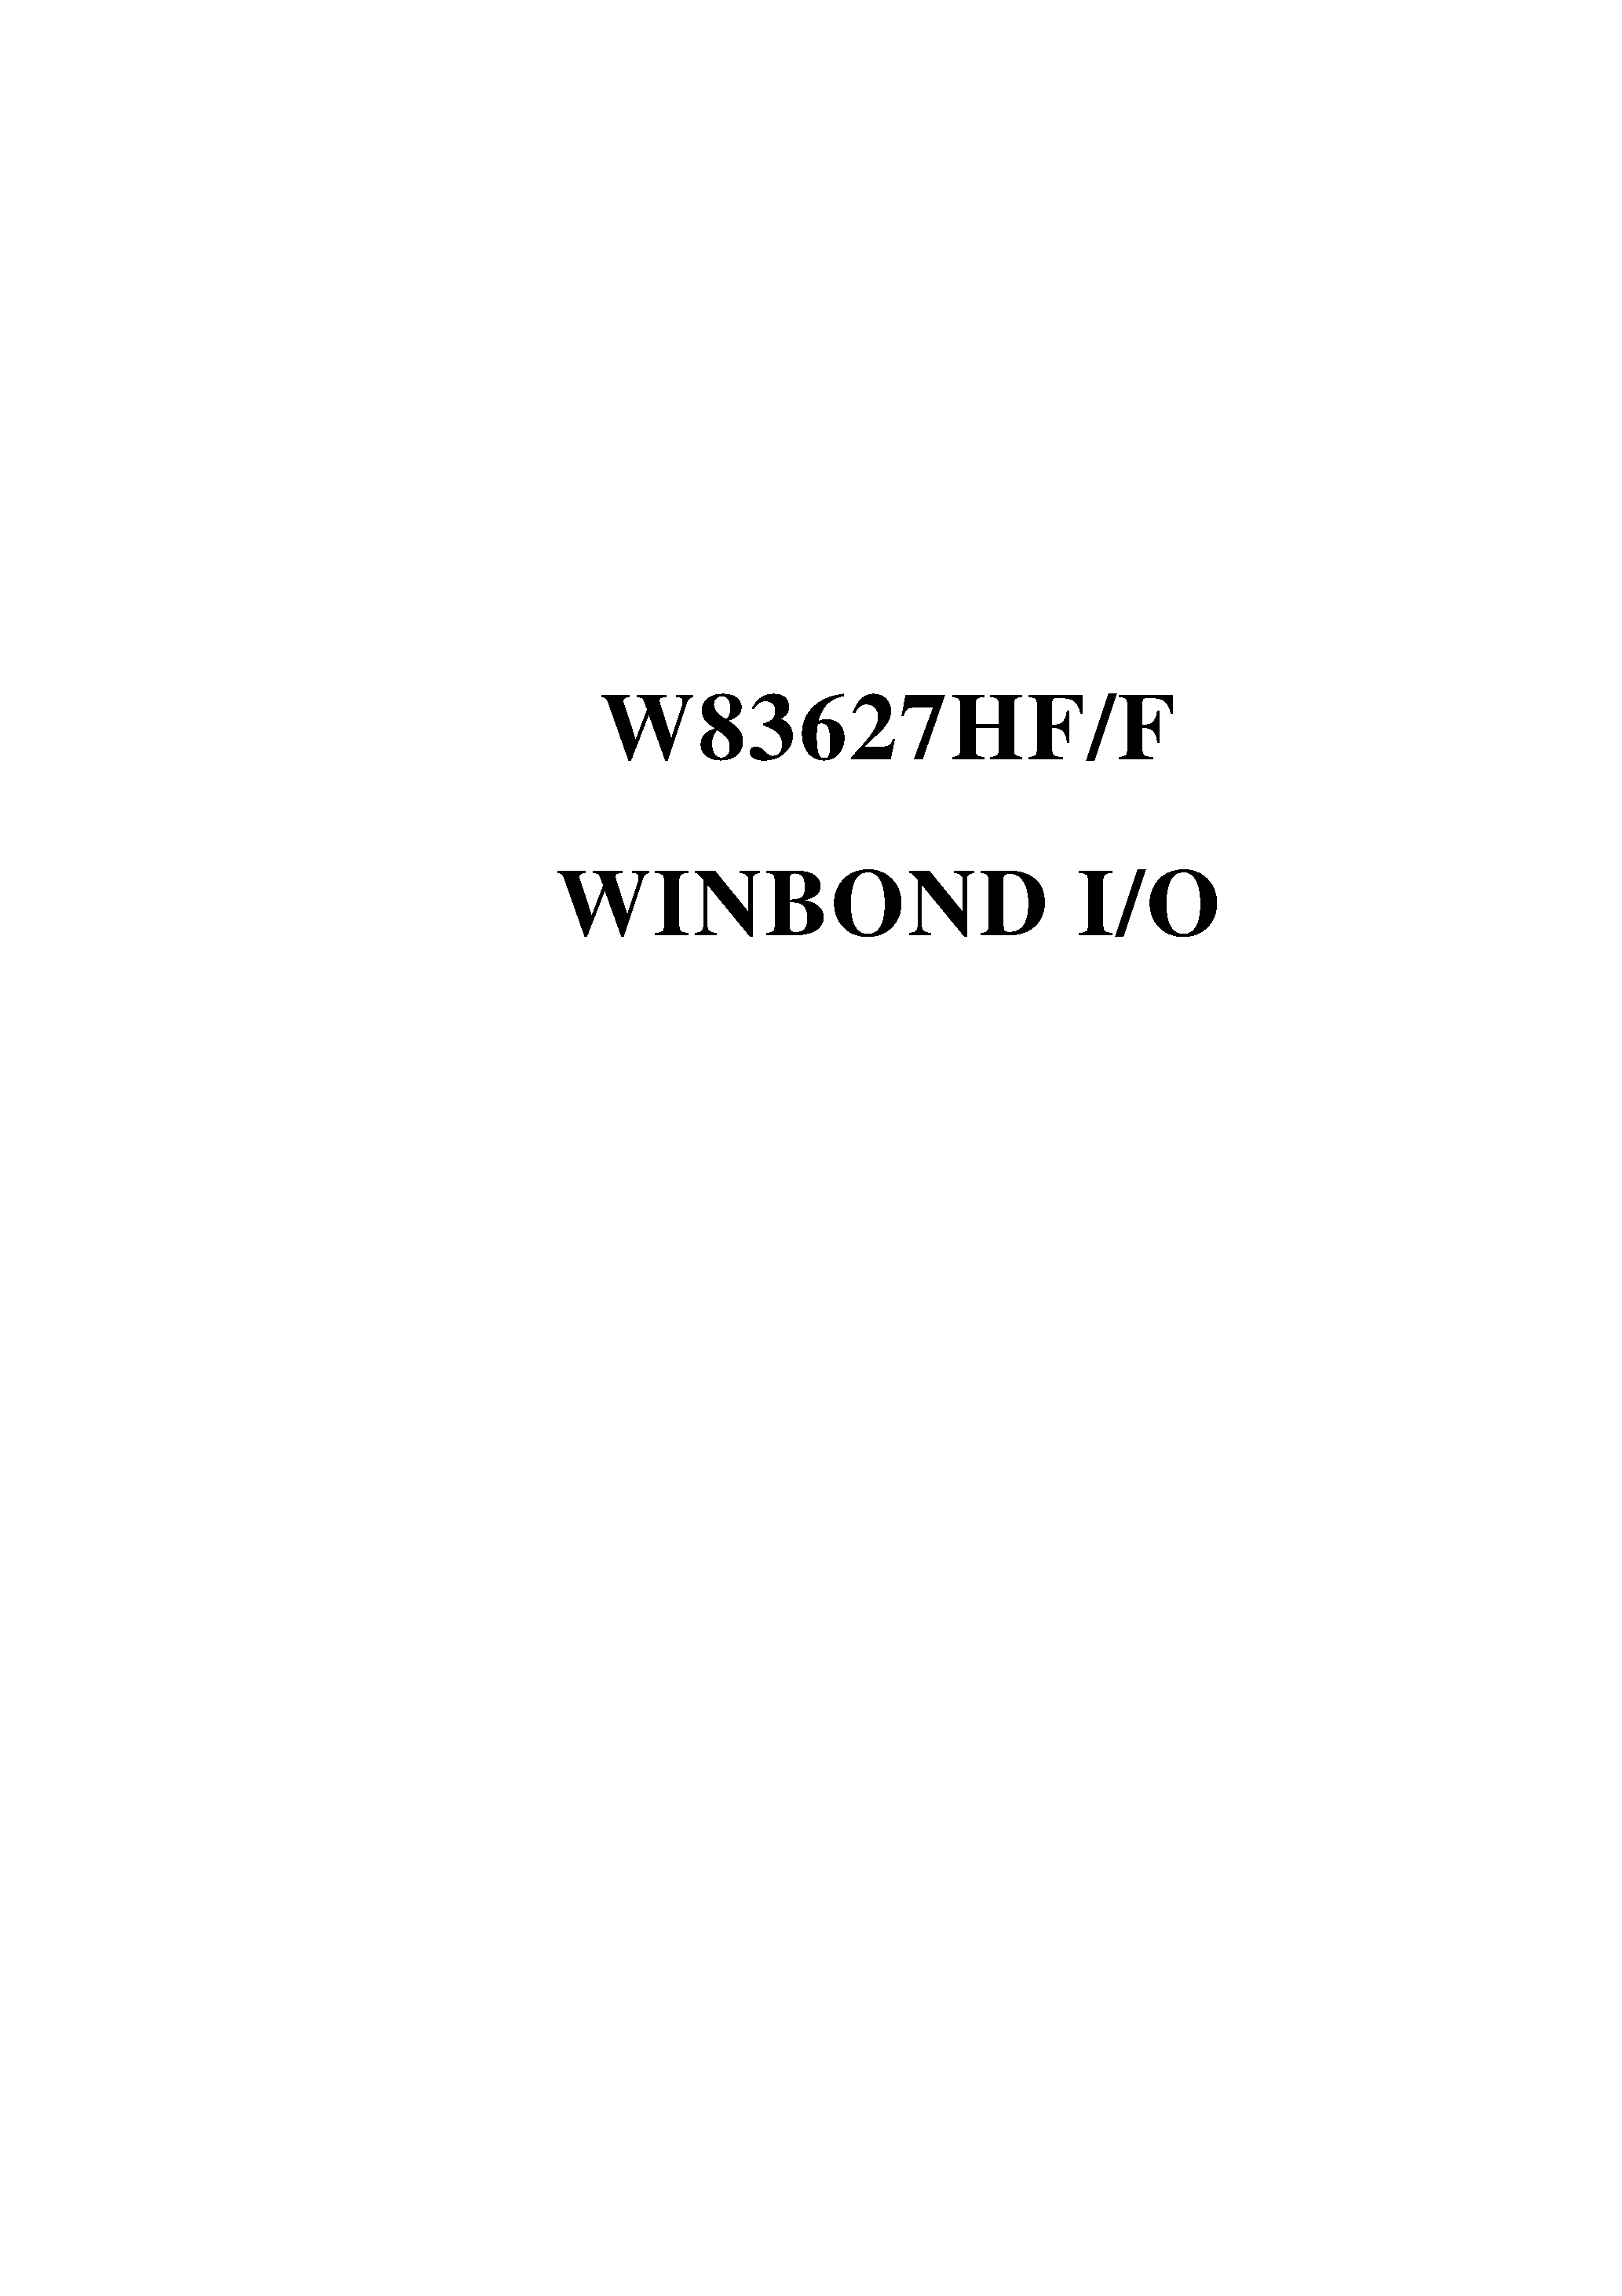 Datasheet W83627F - WINBOND I/O page 1